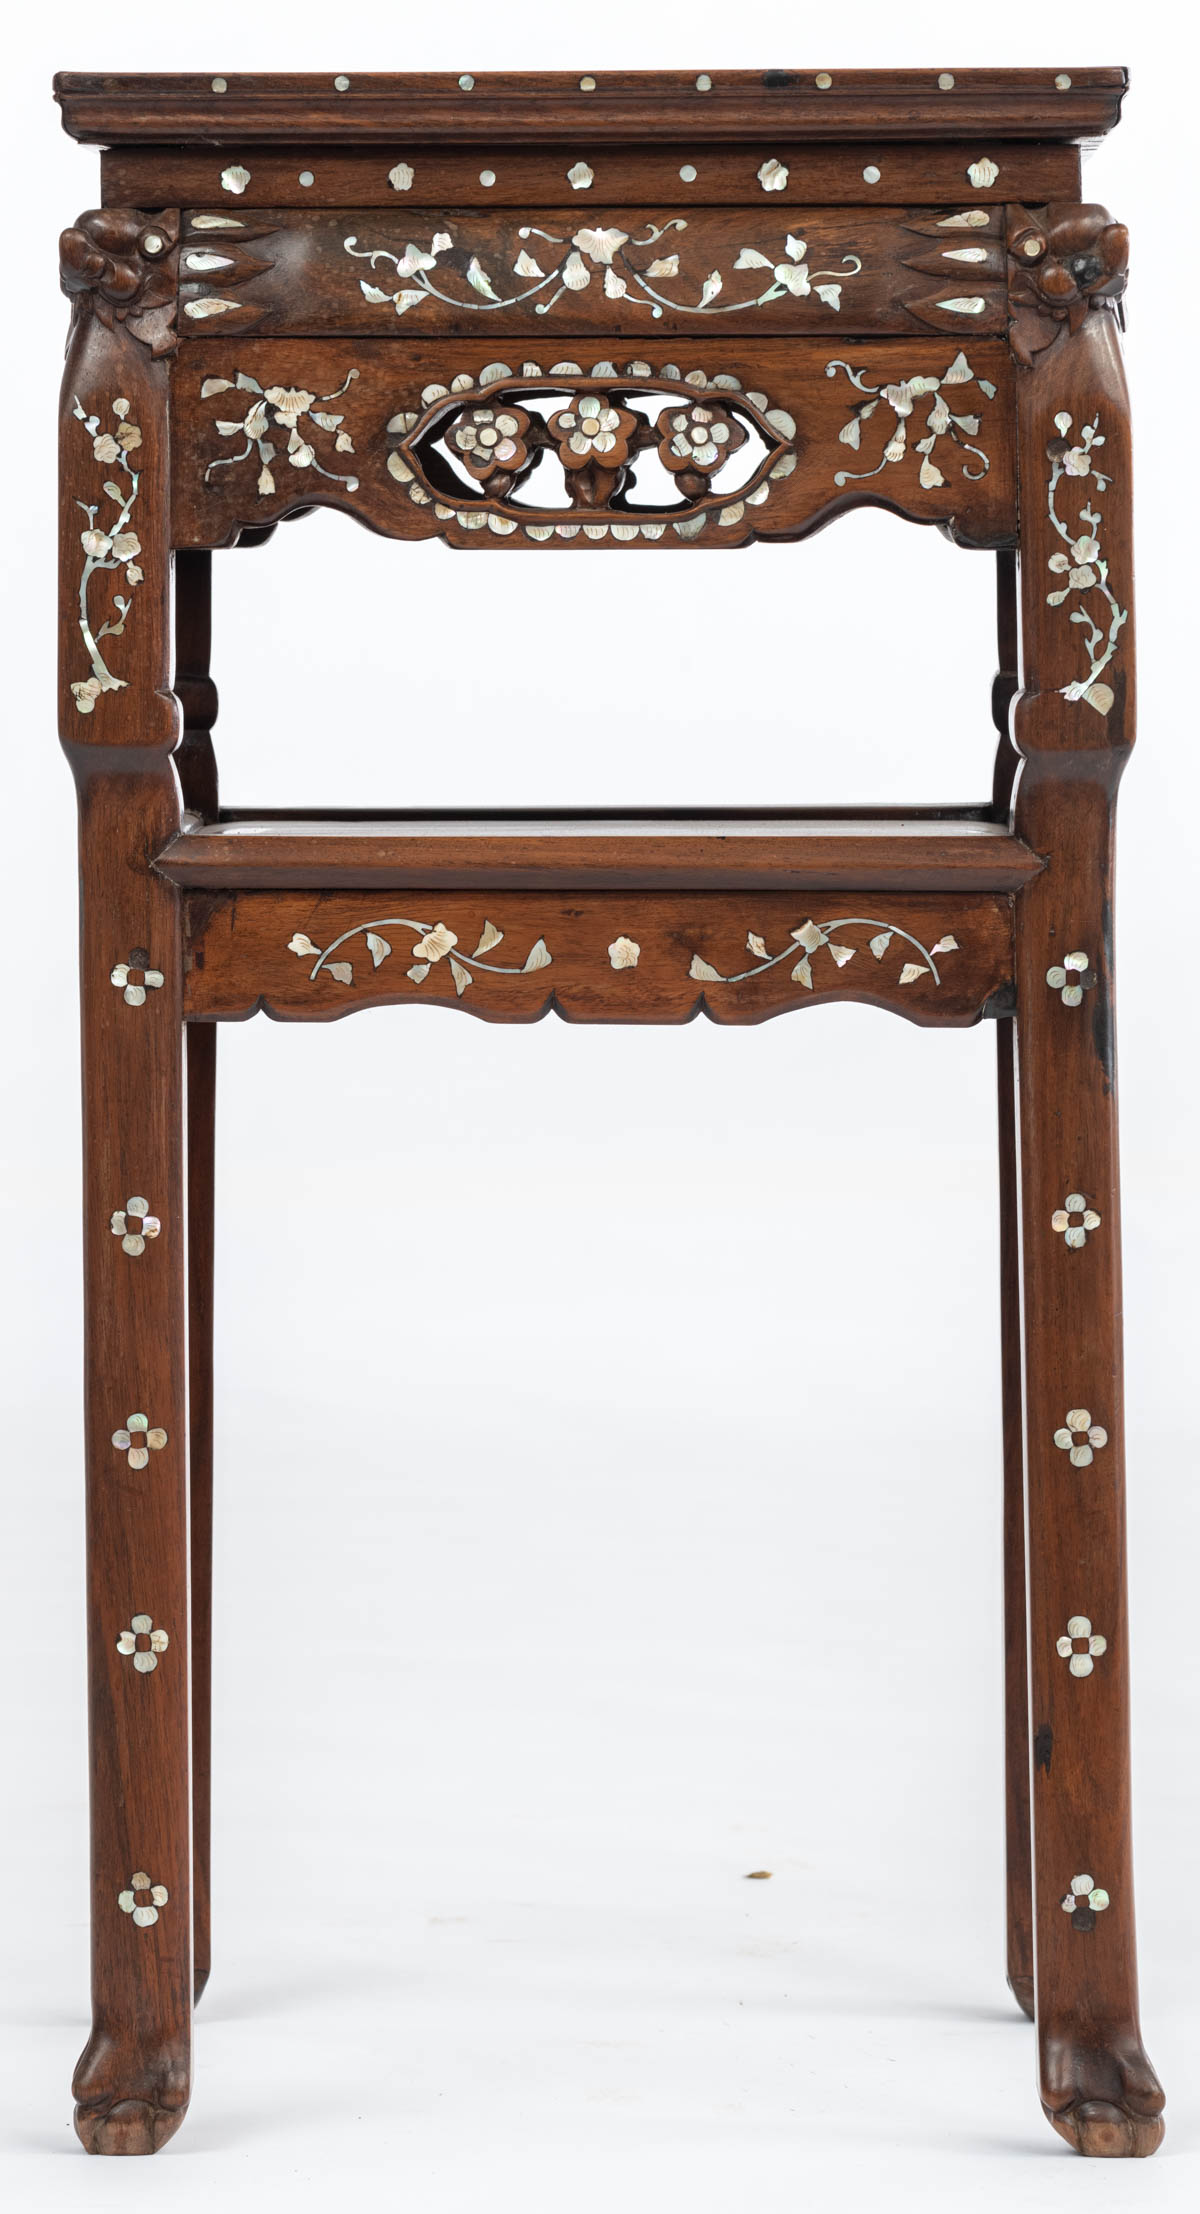 A Chinese exotic hardwood furniture set - Image 8 of 16